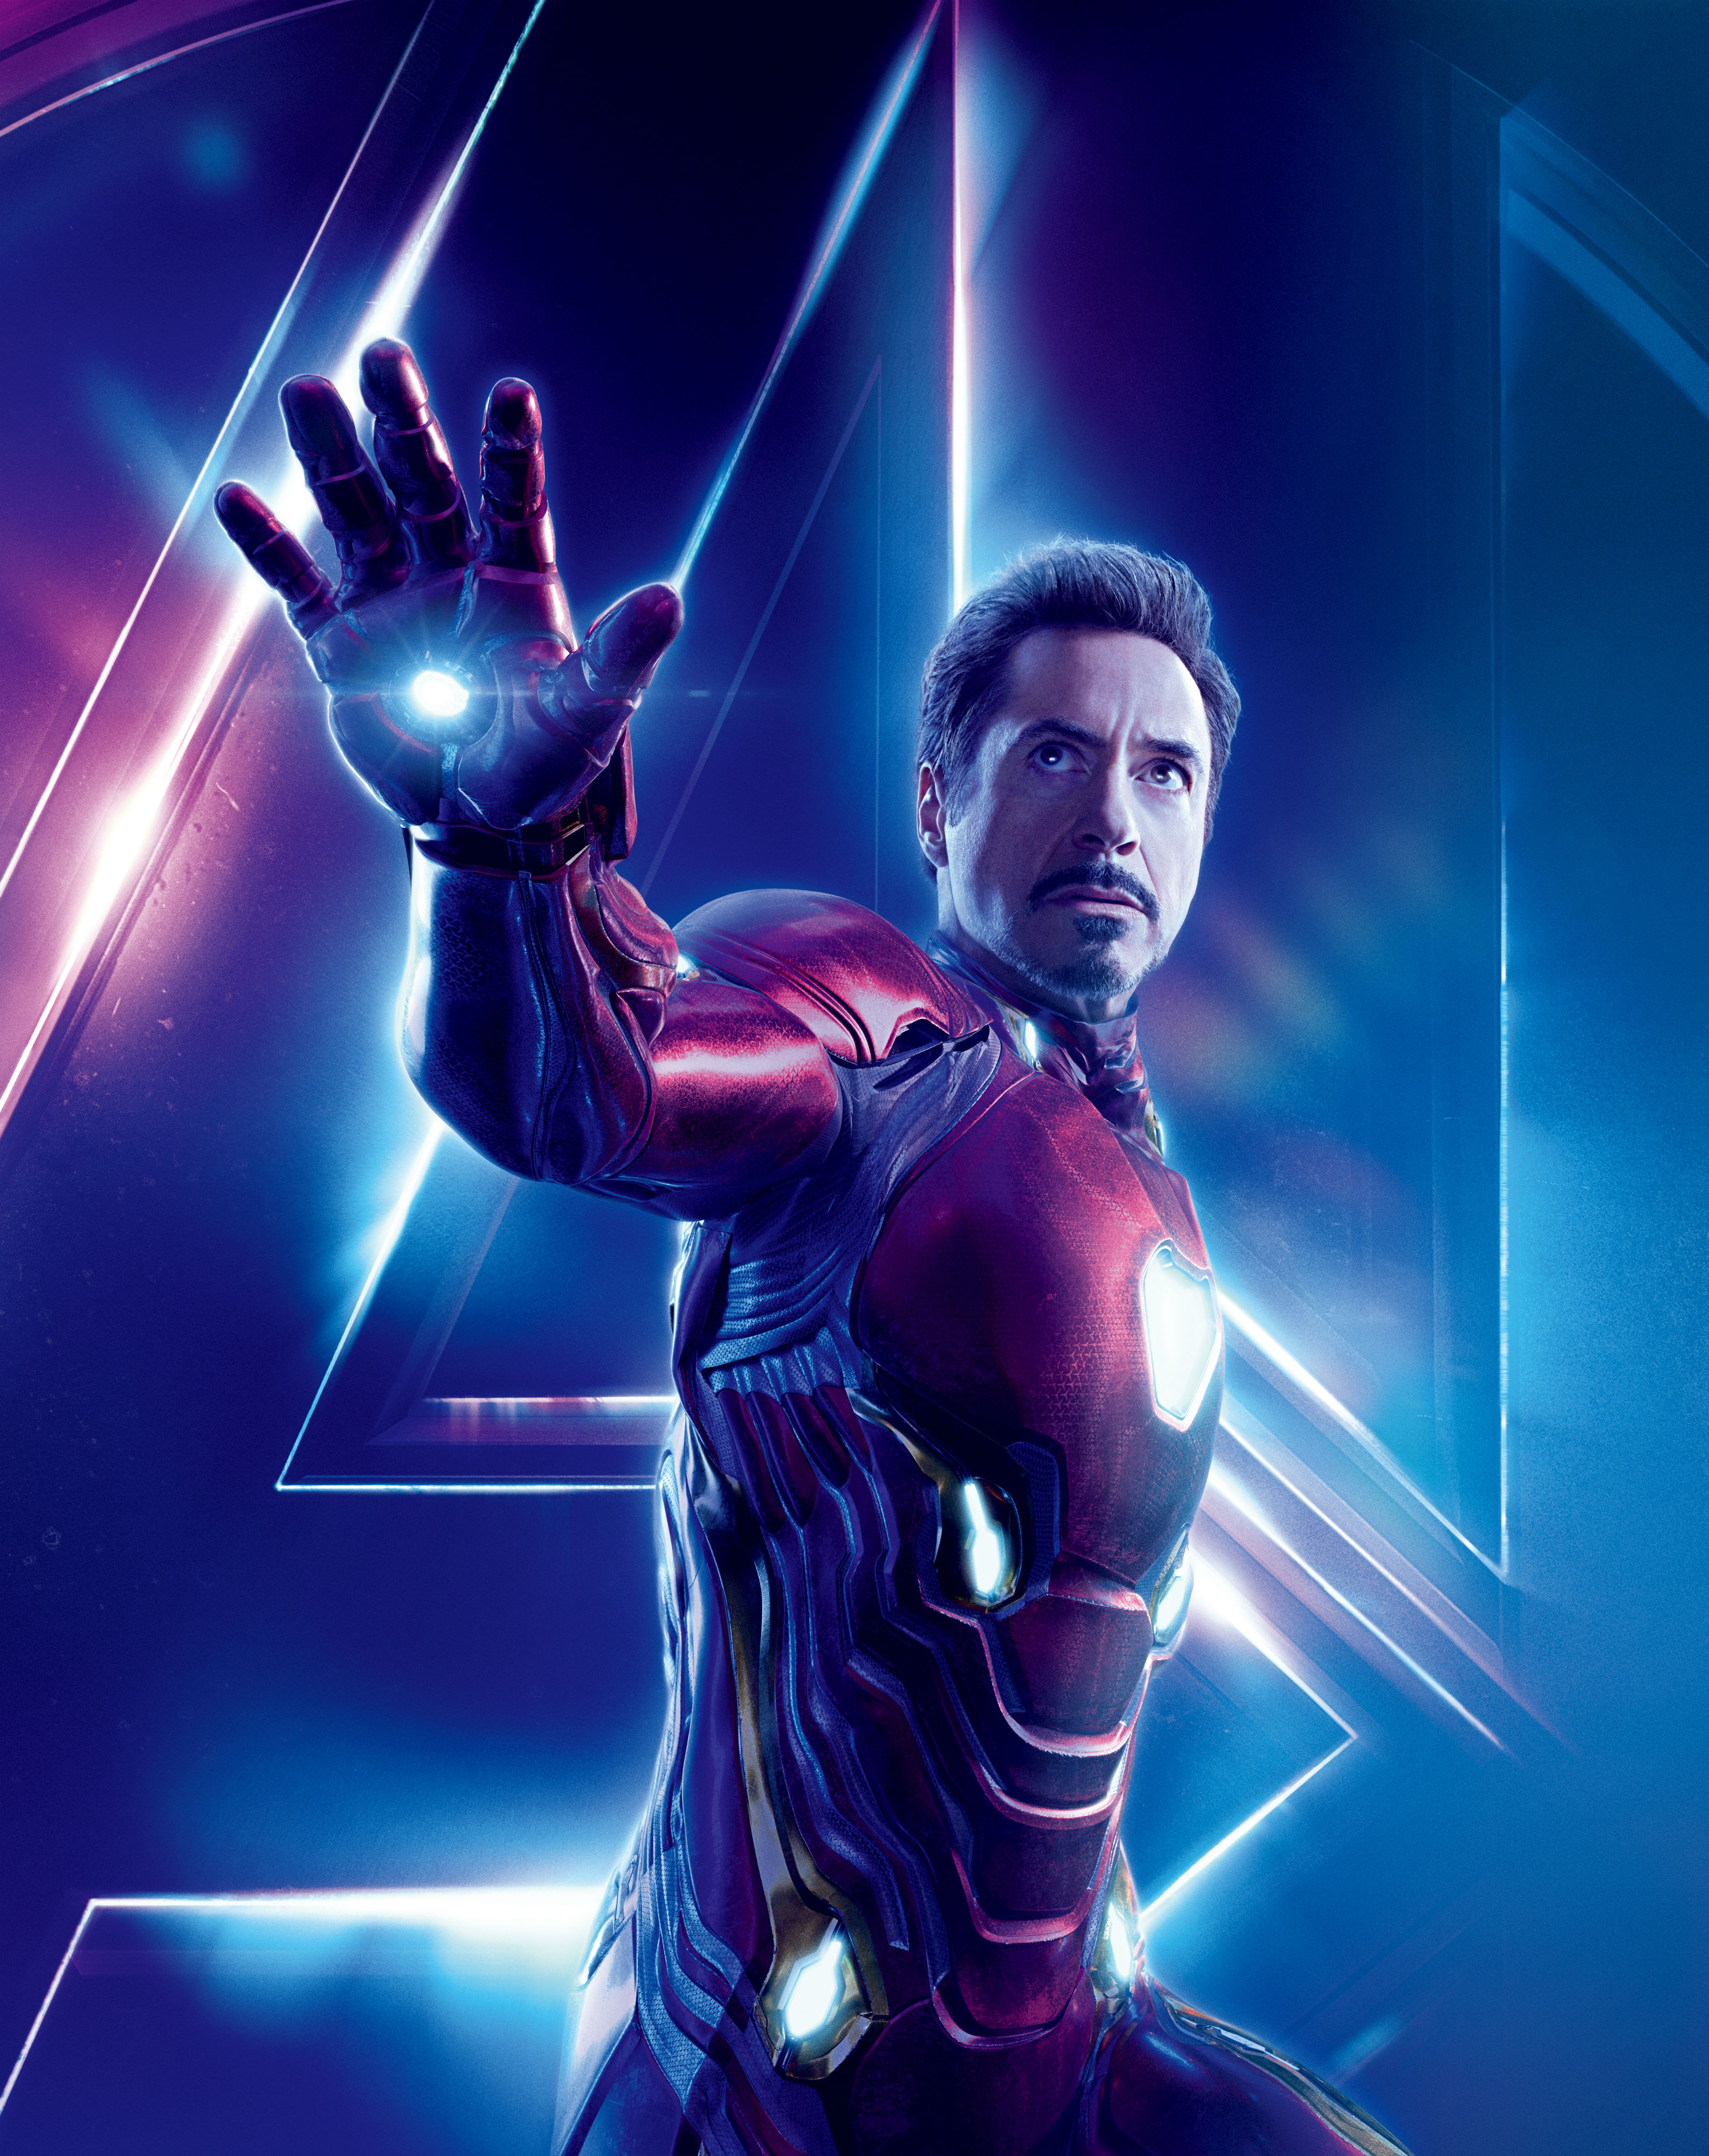 Avengers: Infinity War, Superhero Films Wiki